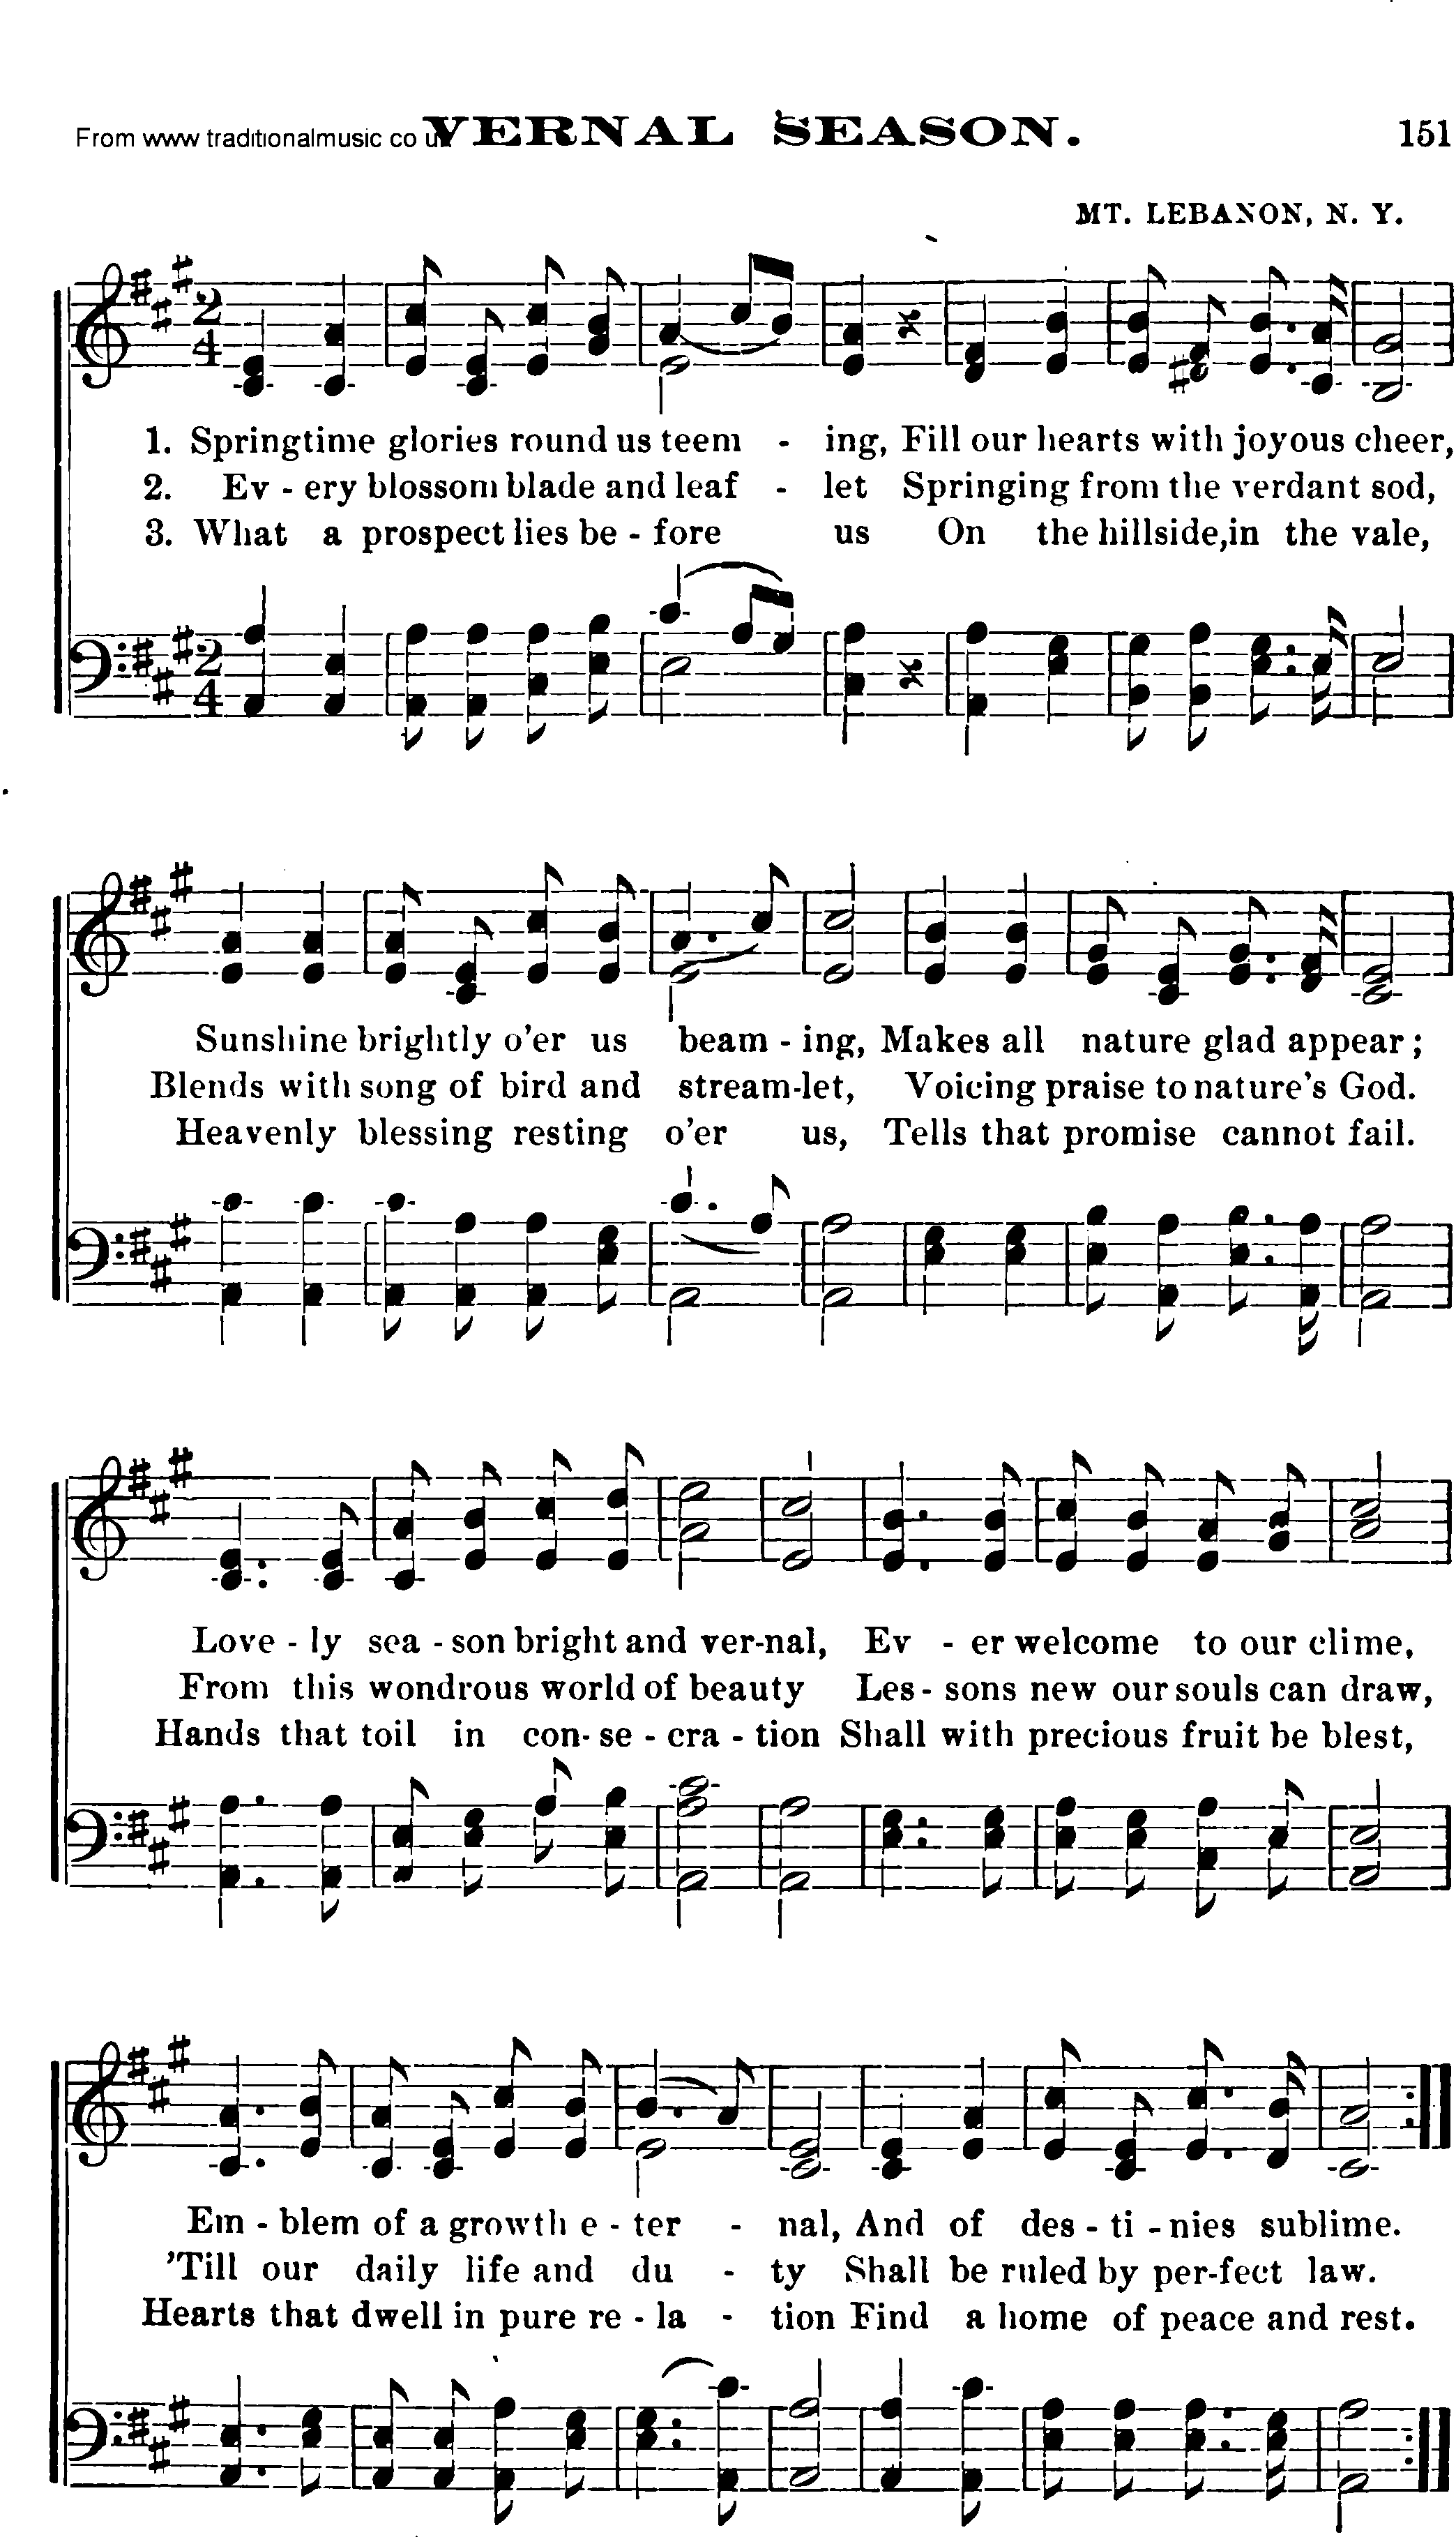 Shaker Music collection, Hymn: Vernal Season, sheetmusic and PDF